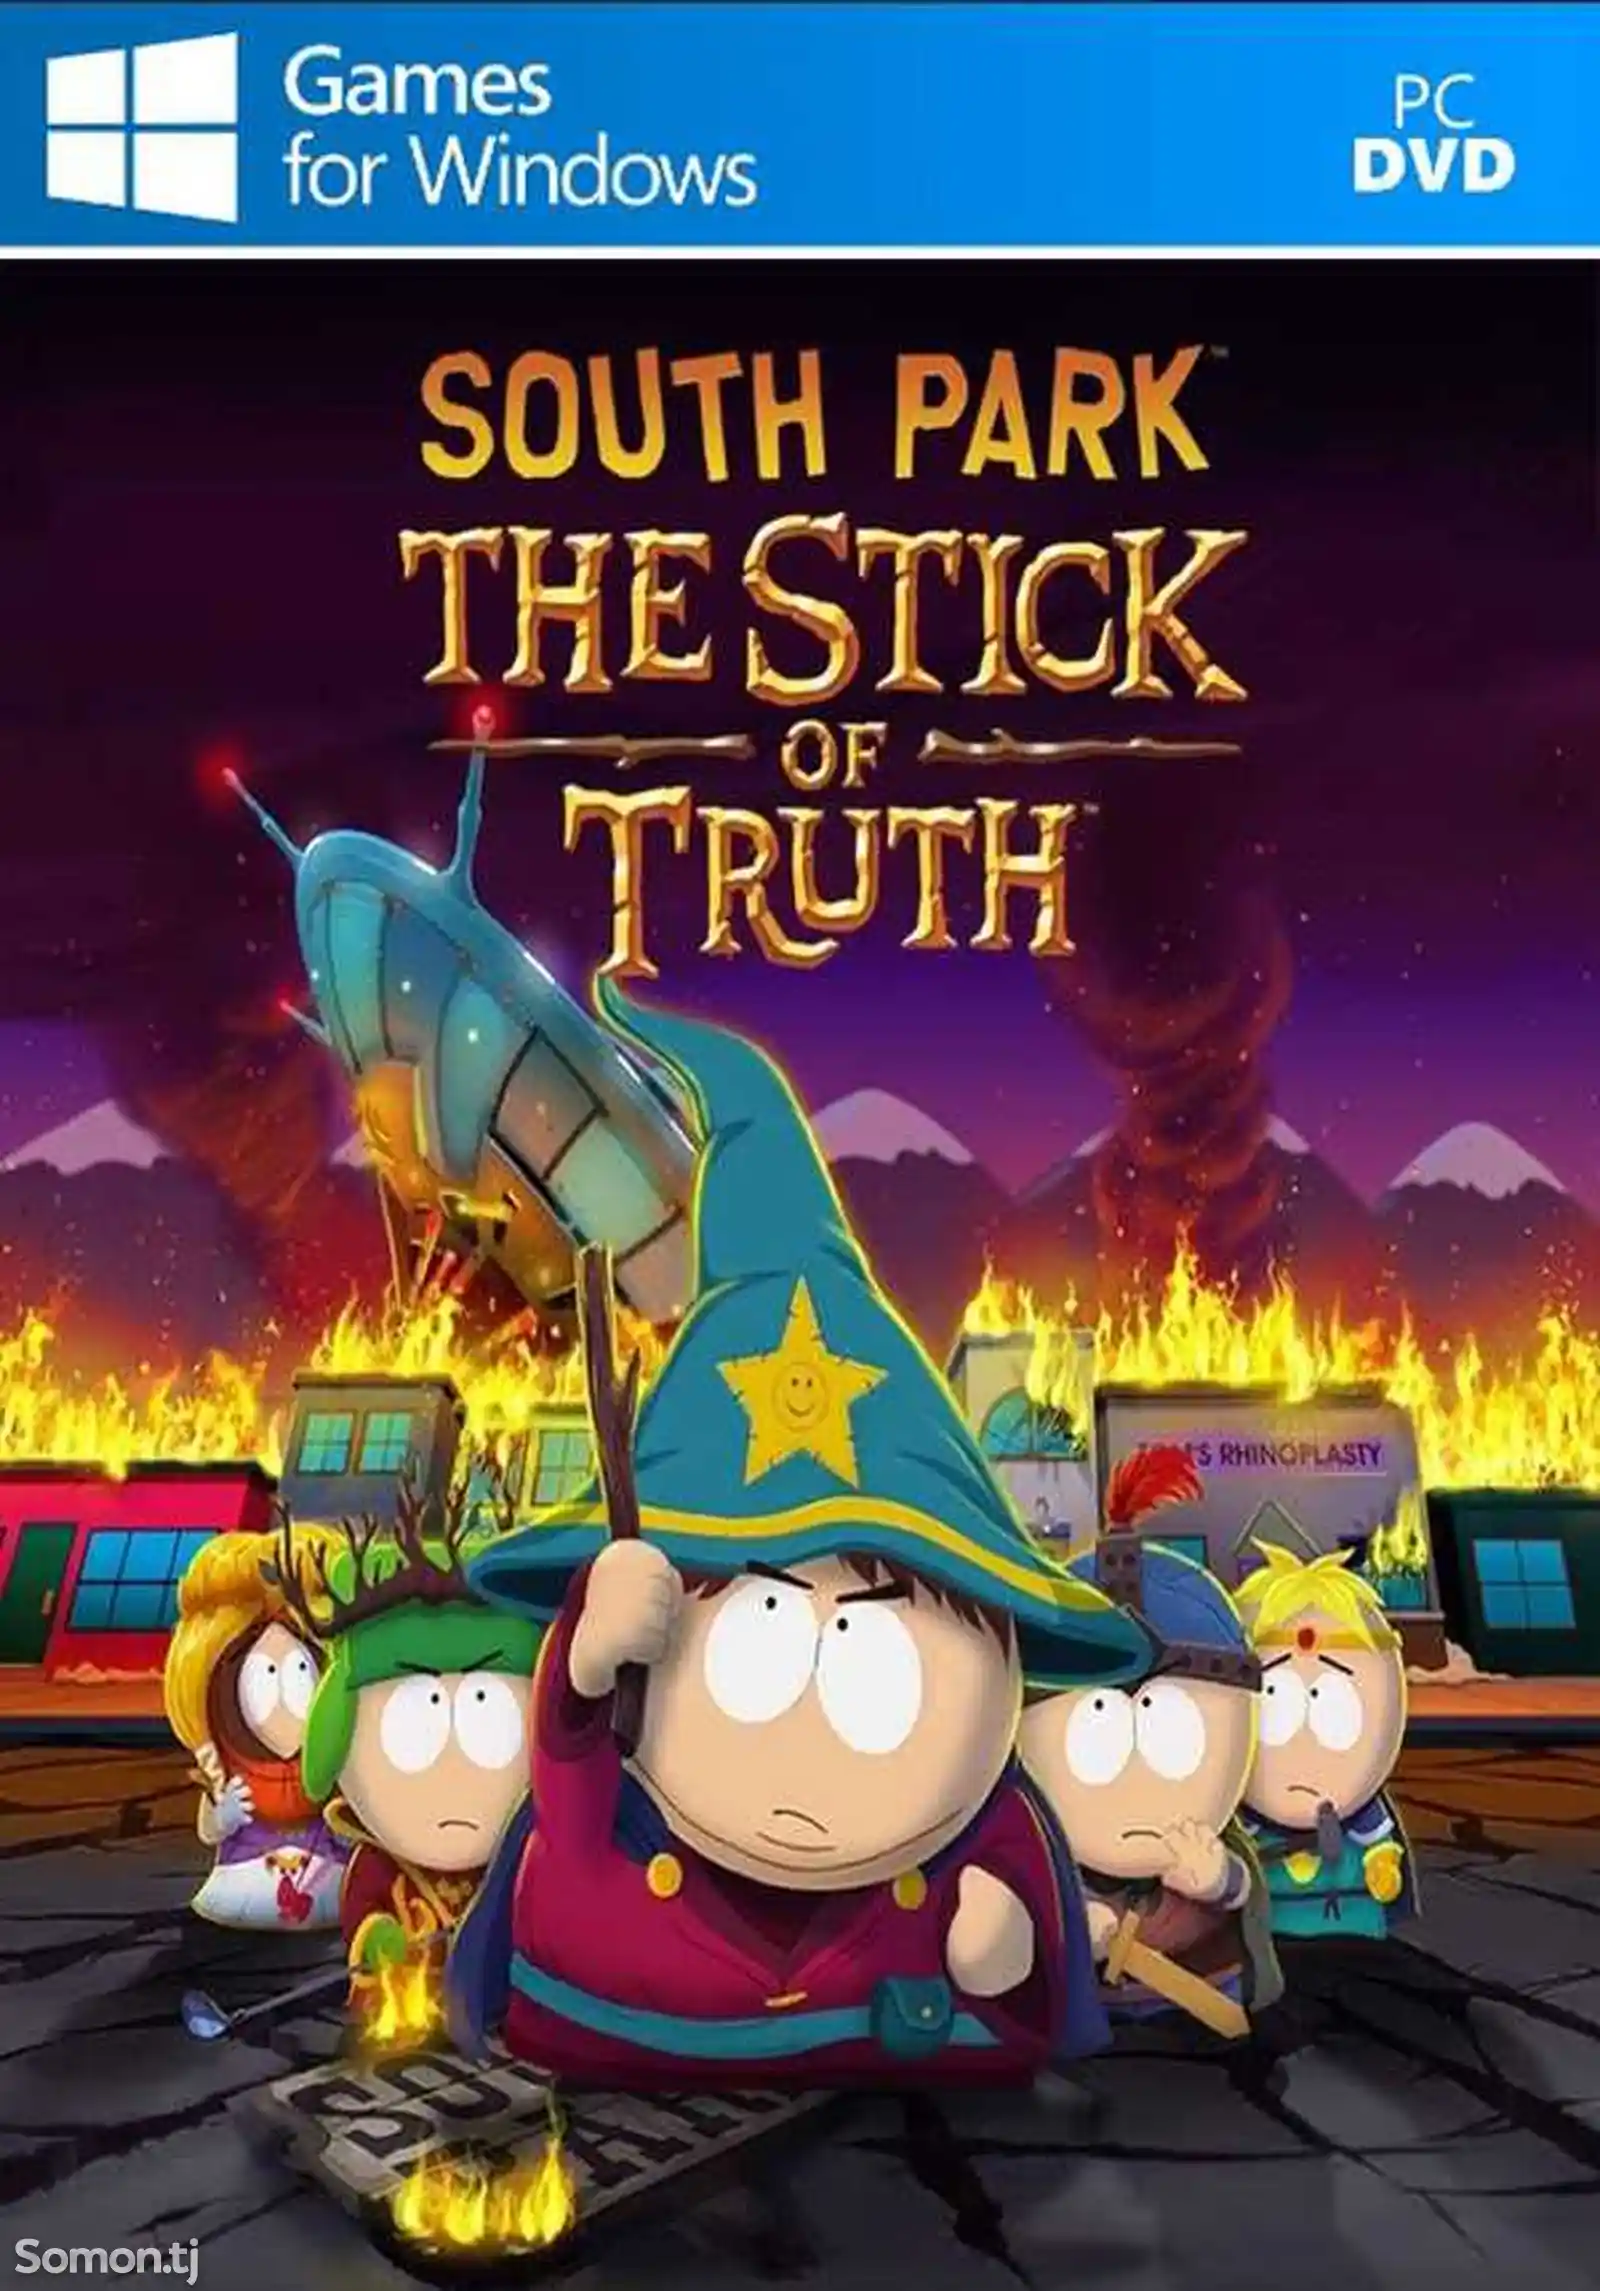 Игра South park the stick of truth для компьютера-пк-pc-1